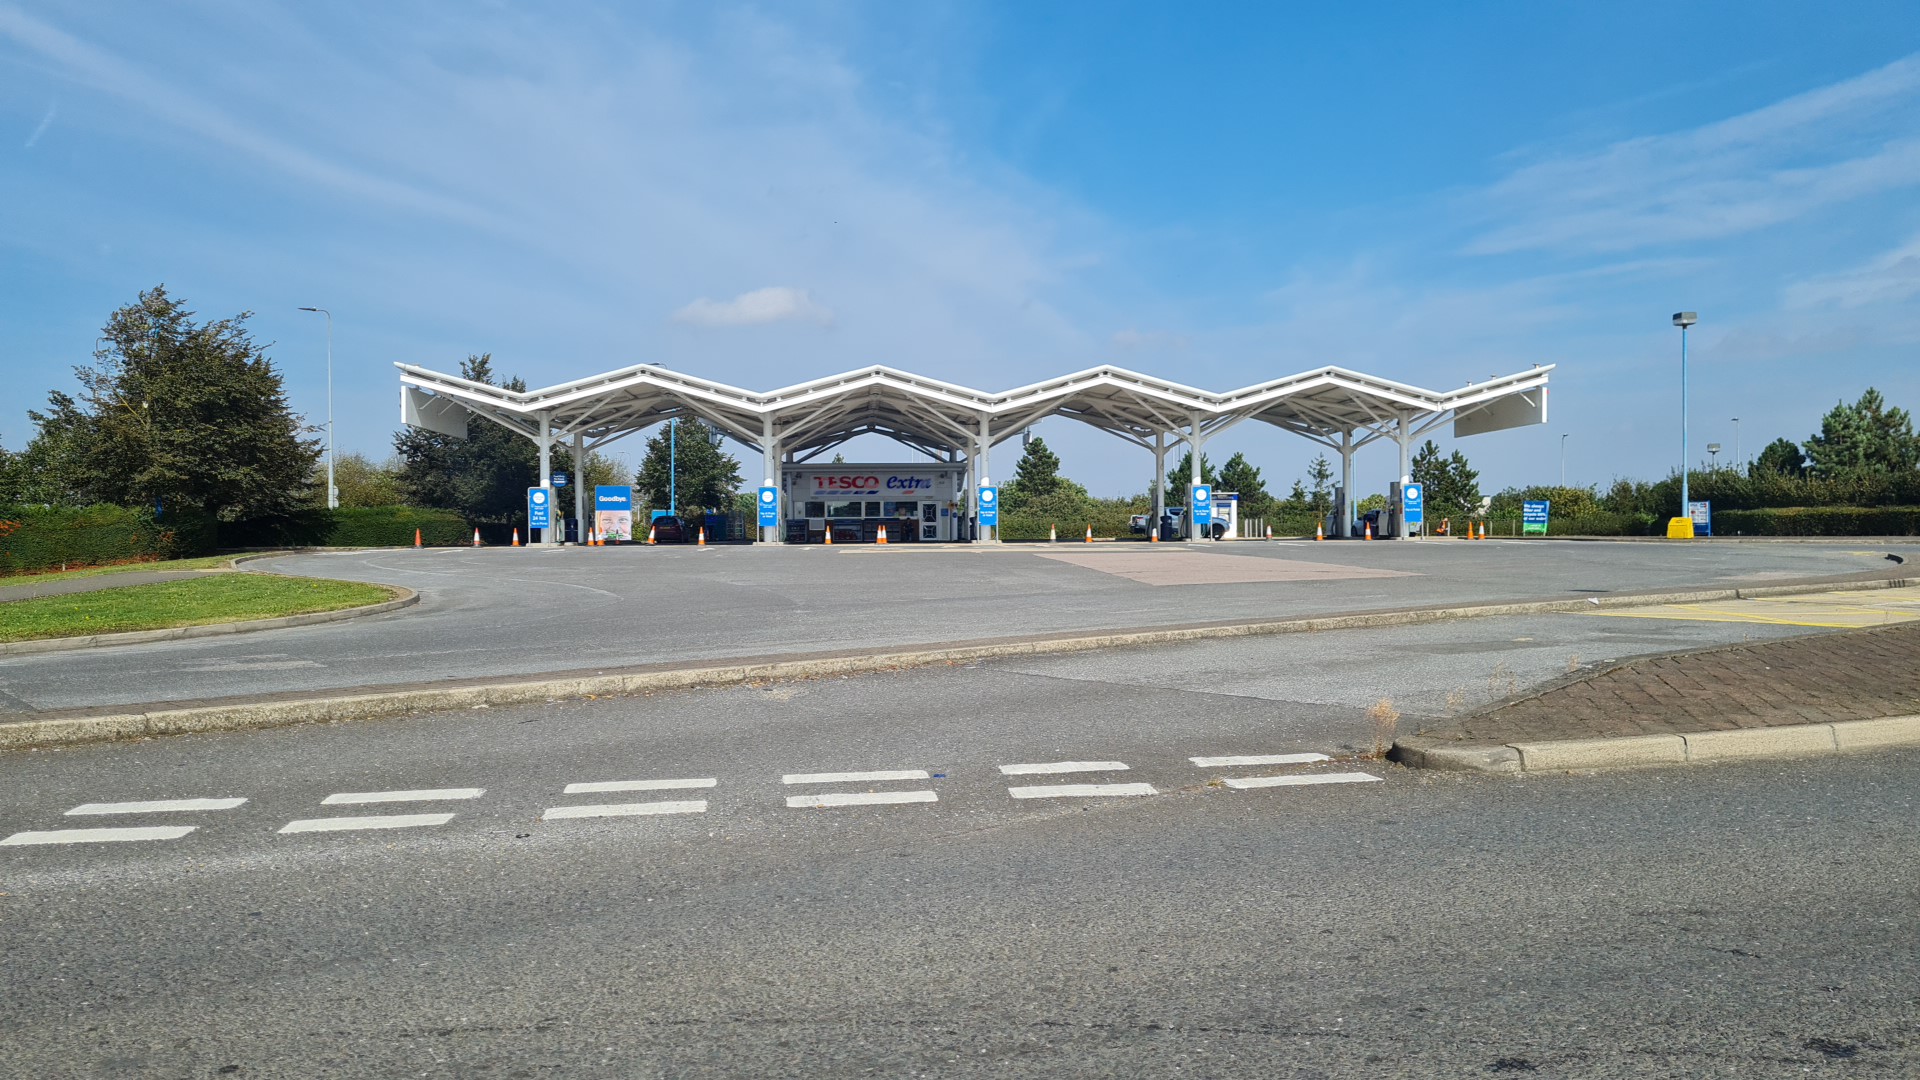 Tesco Petrol Station